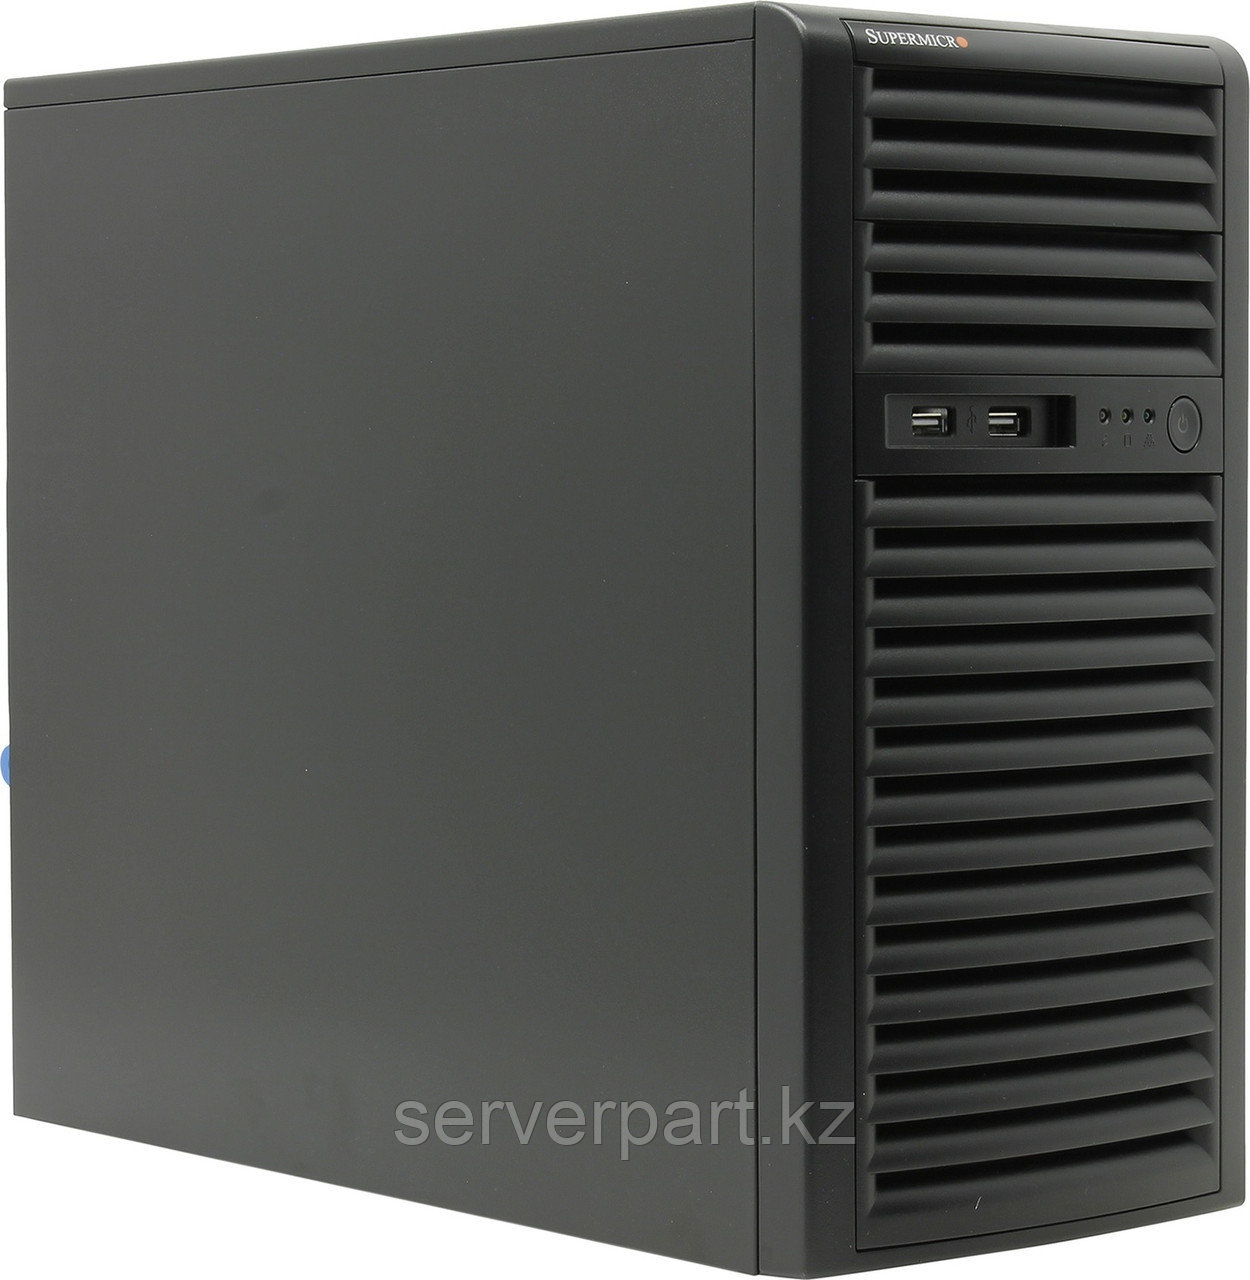 Сервер Supermicro SYS-5039C Tower 4LFF/4-core intel xeon E2124 3.3GHz/48GB UDIMM nECC/1x480GB SSD DT Hyb